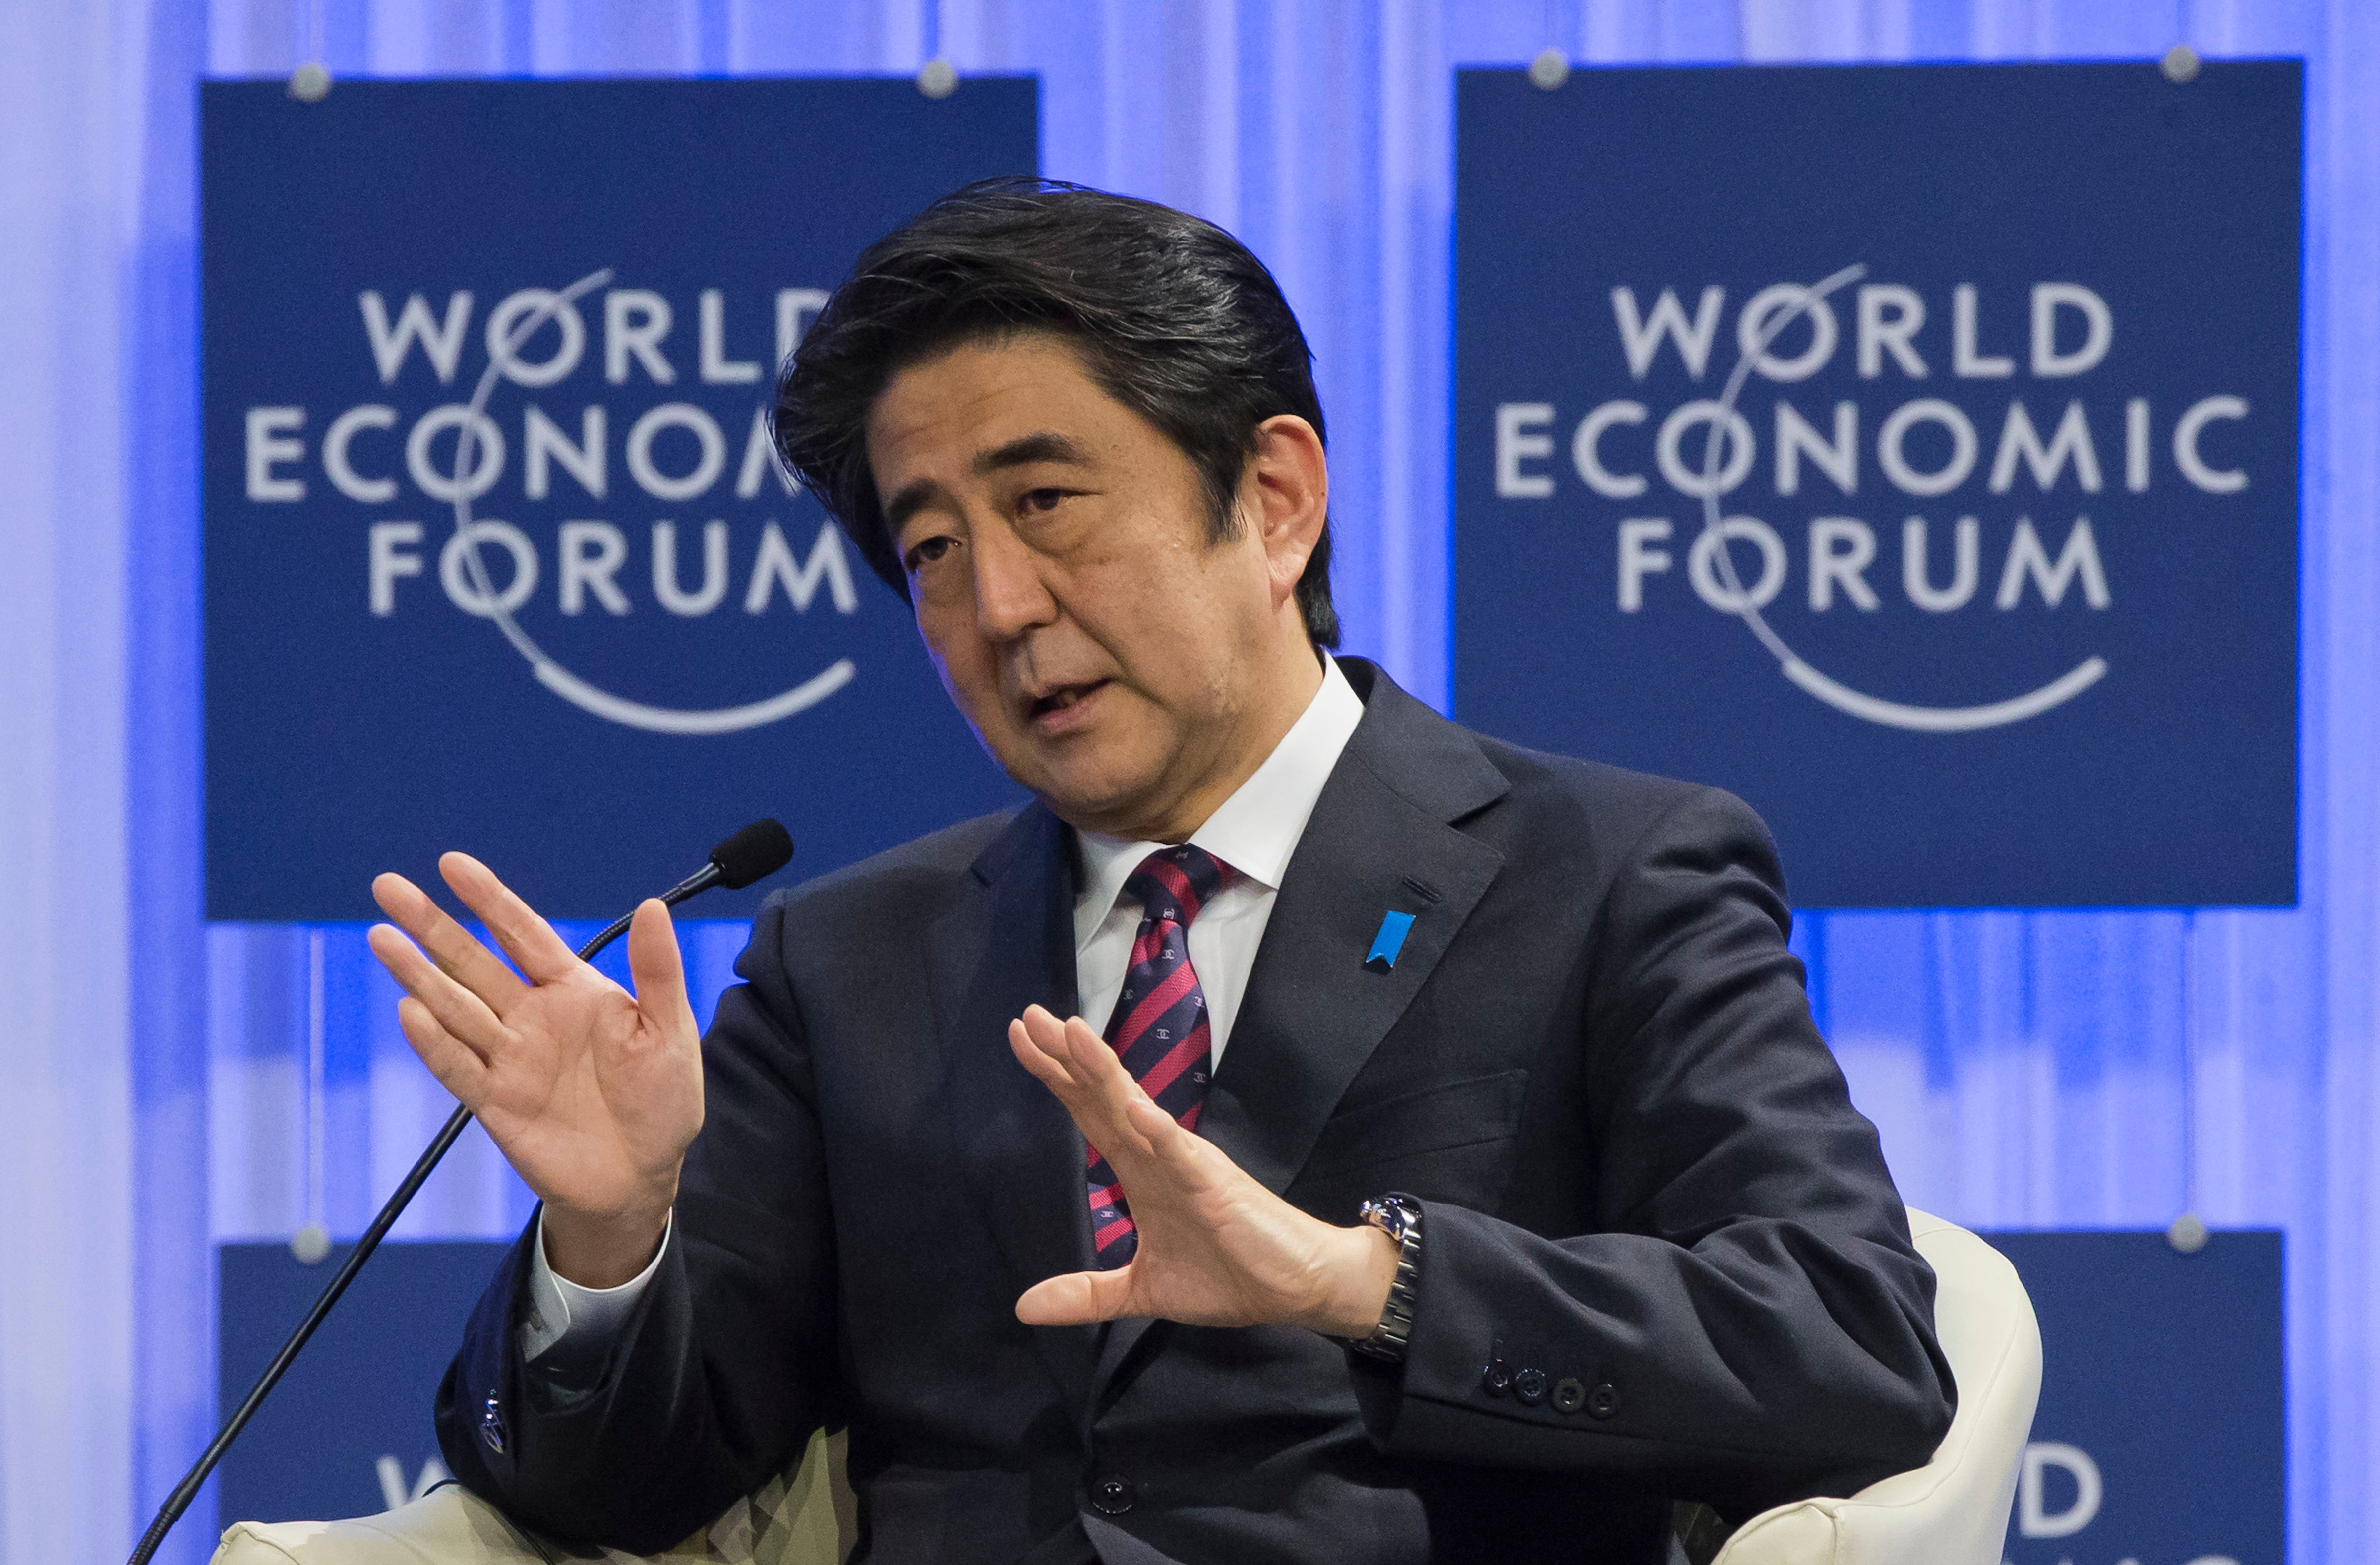 Japanese prime minister Shinzo Abe speaks at the World Economic Forum in Davos, Switzerland, on Jan. 22, 2014.